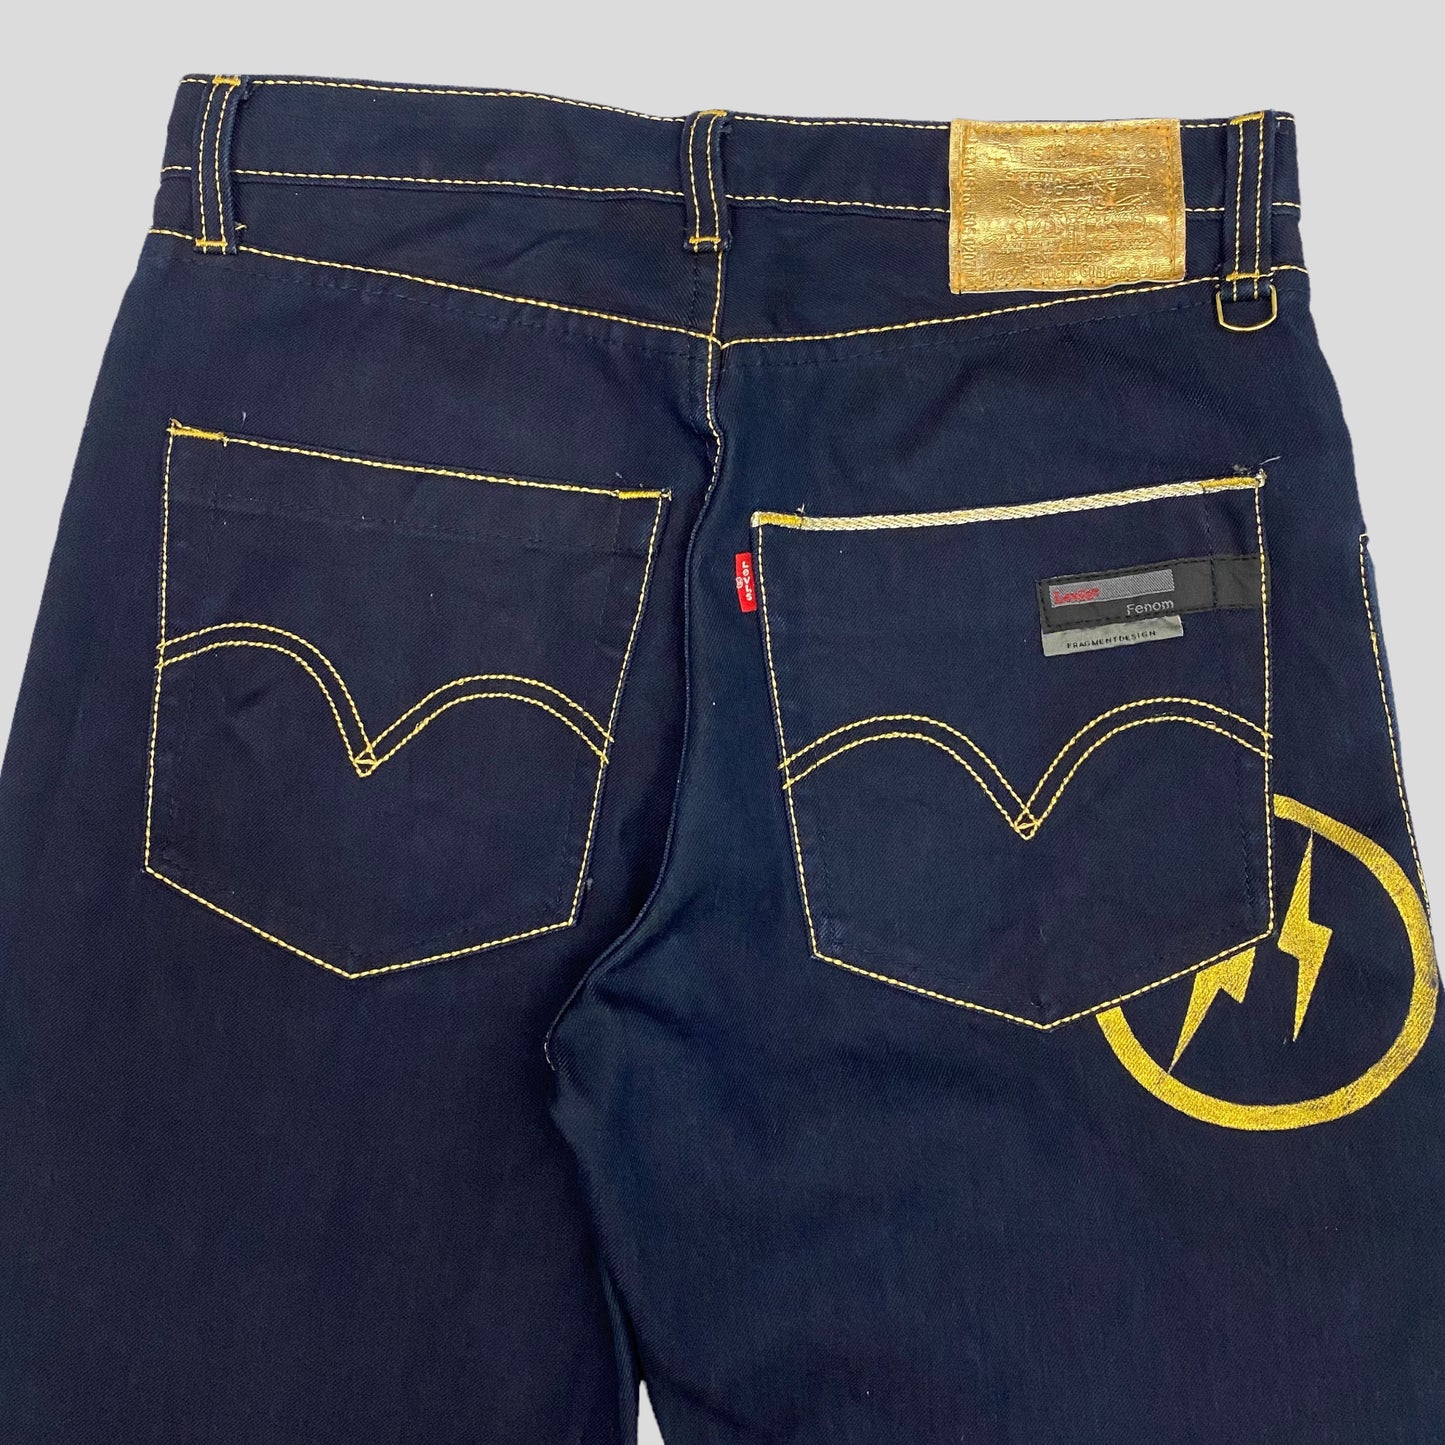 Levi’s x Fragment Fenom Selvedge Denim Jeans - W32